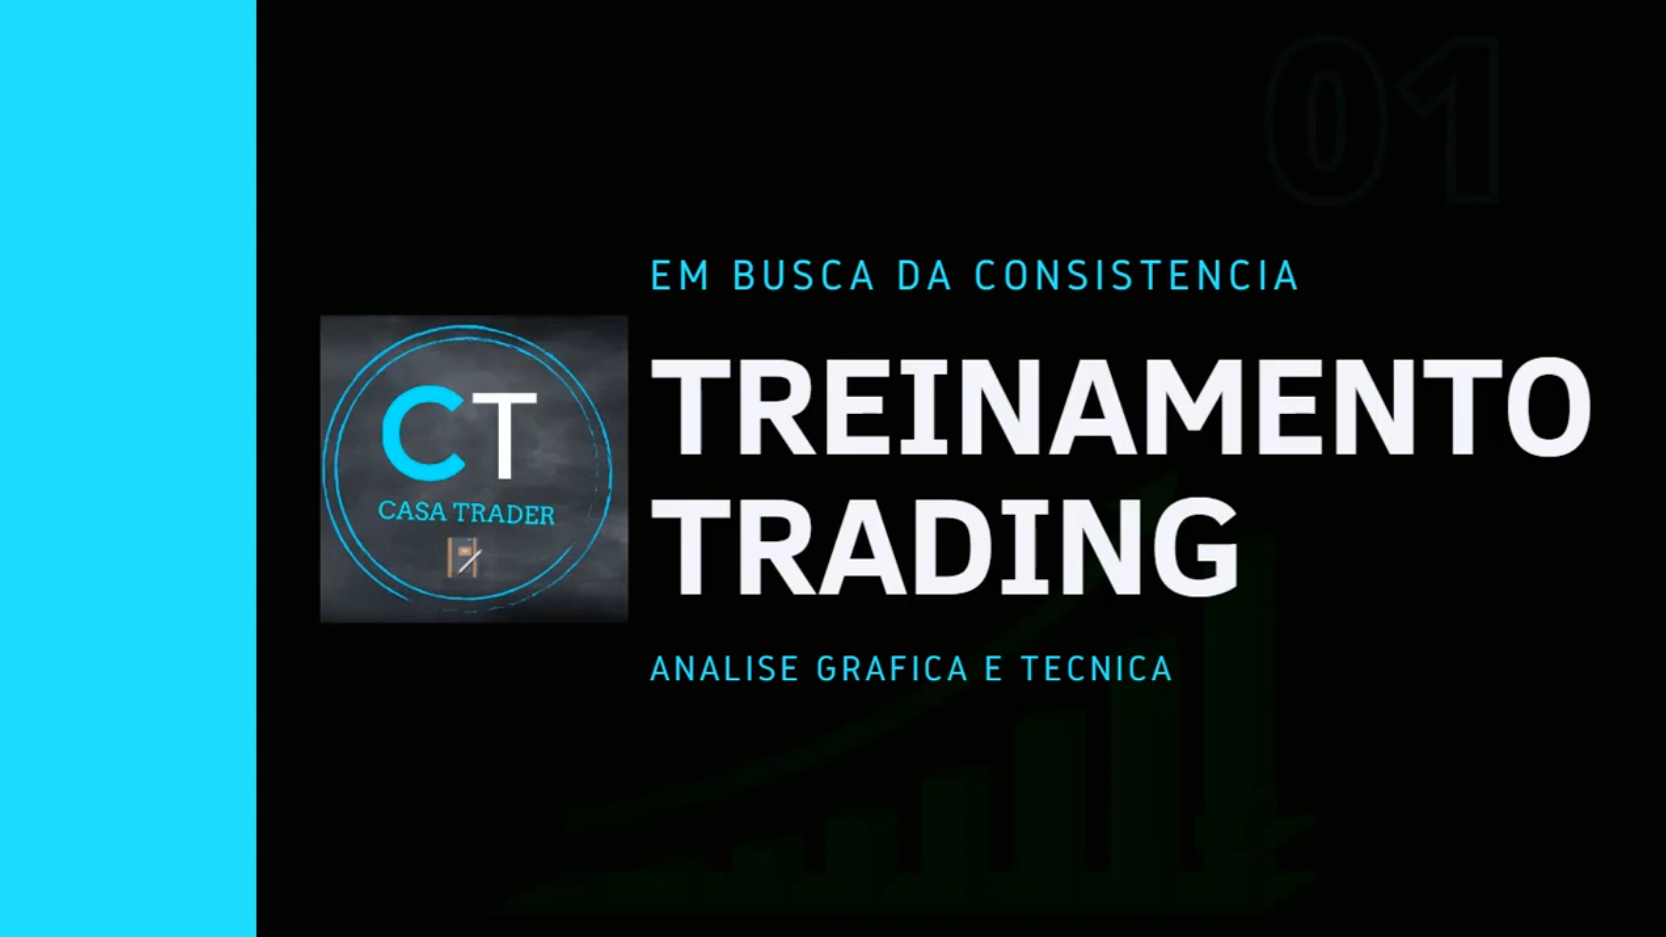 Casa Trader - Treinamento Trading